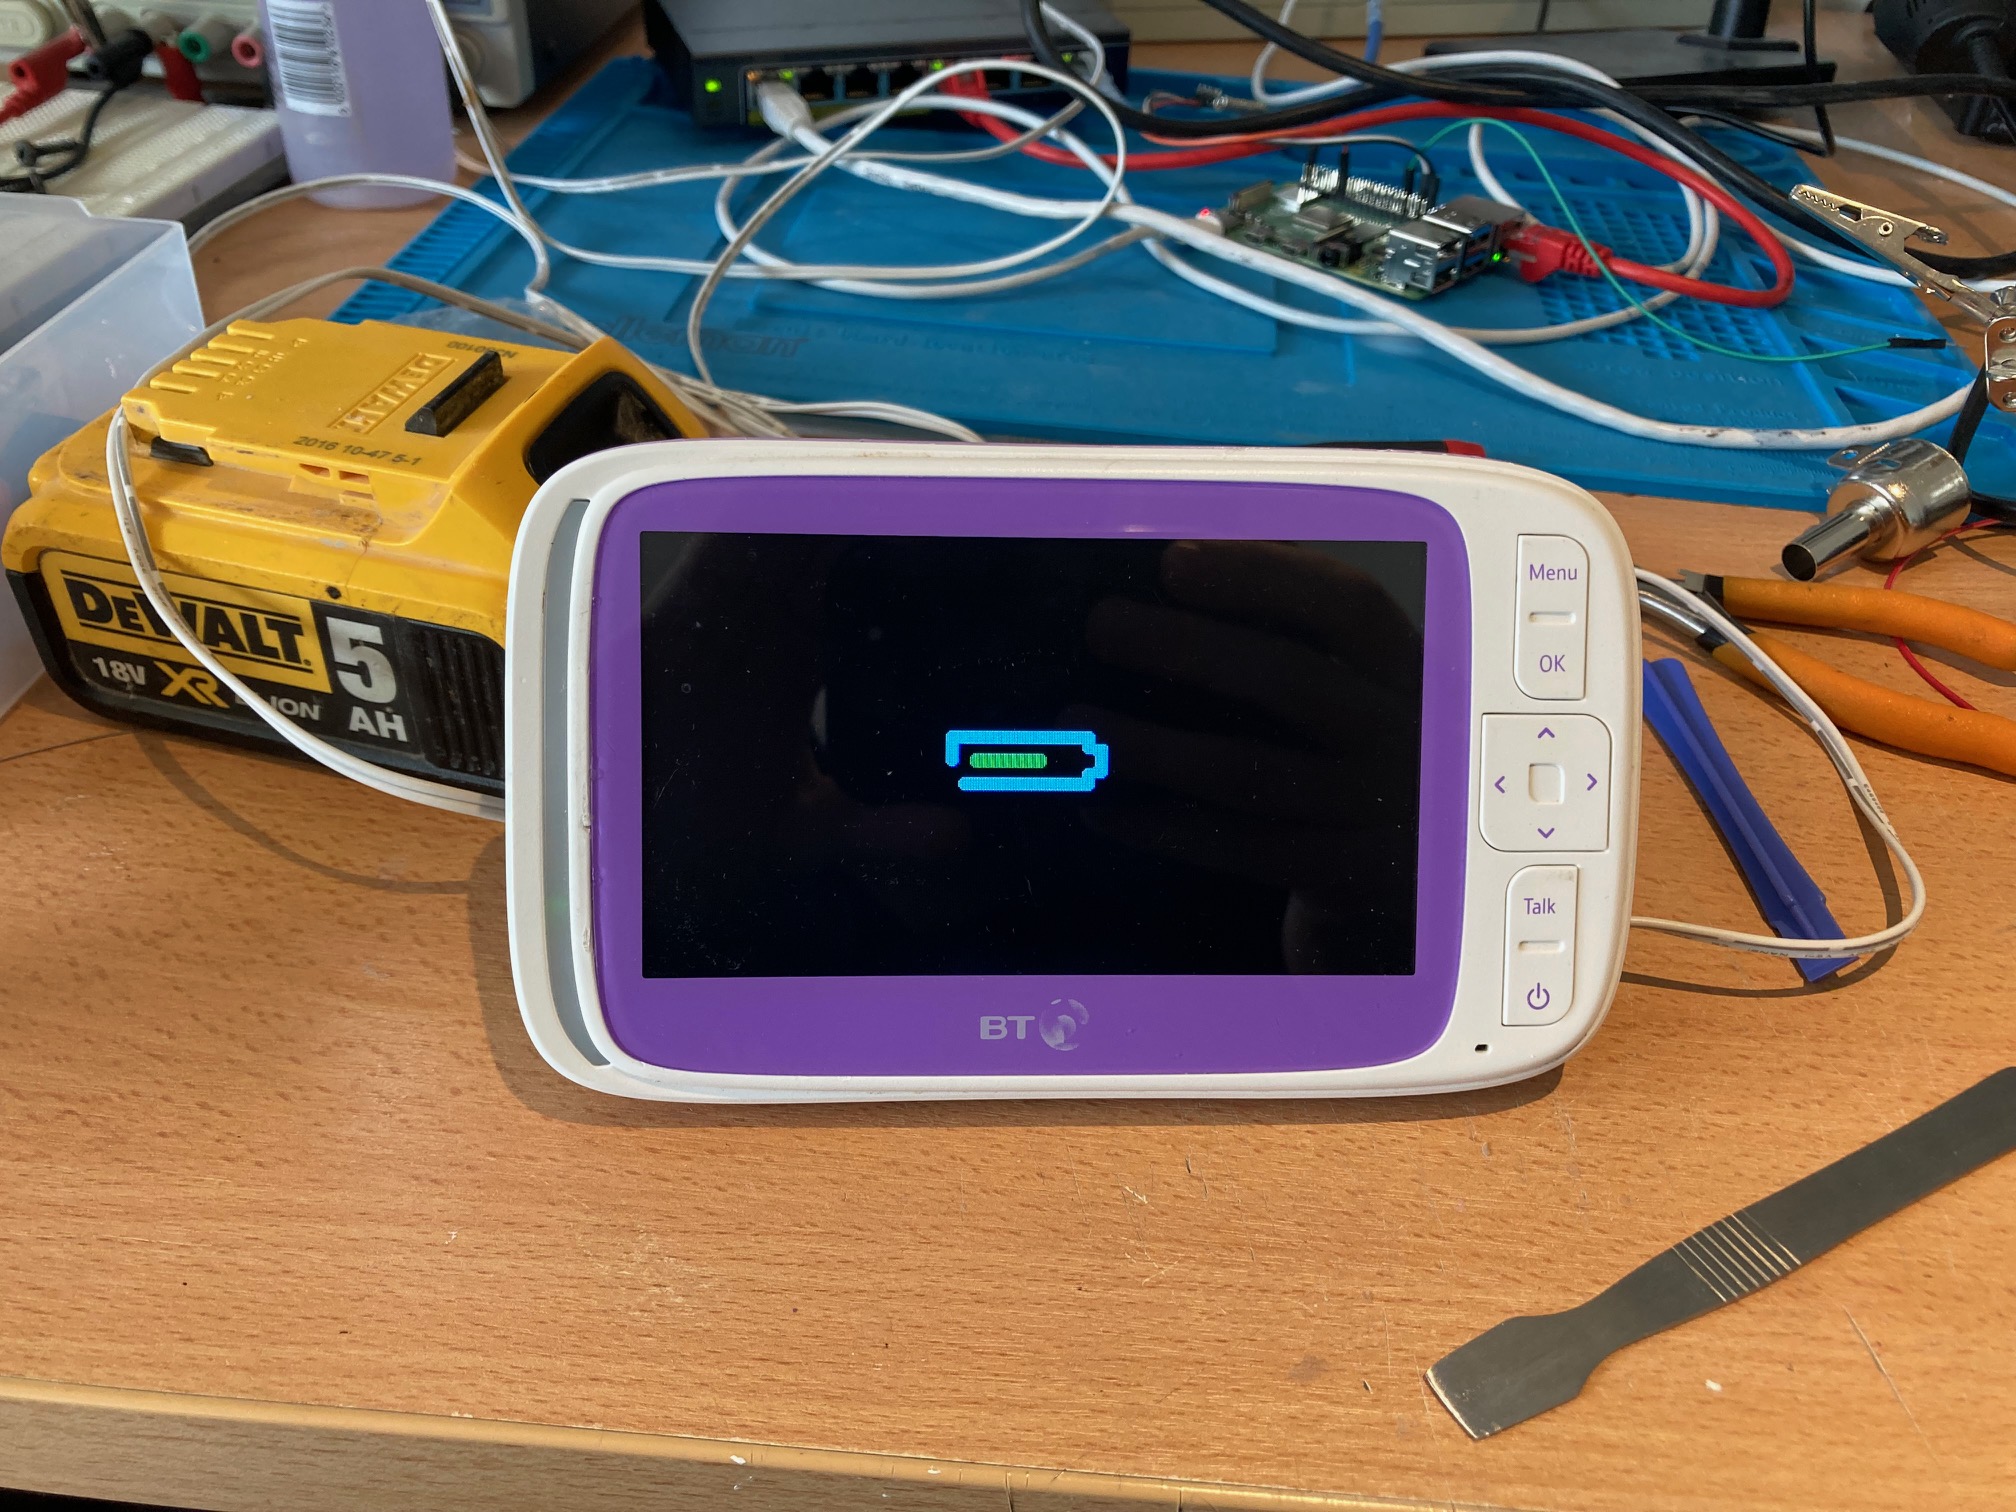 BOIFUN Baby Monitor All Models USB Charging Port Repair